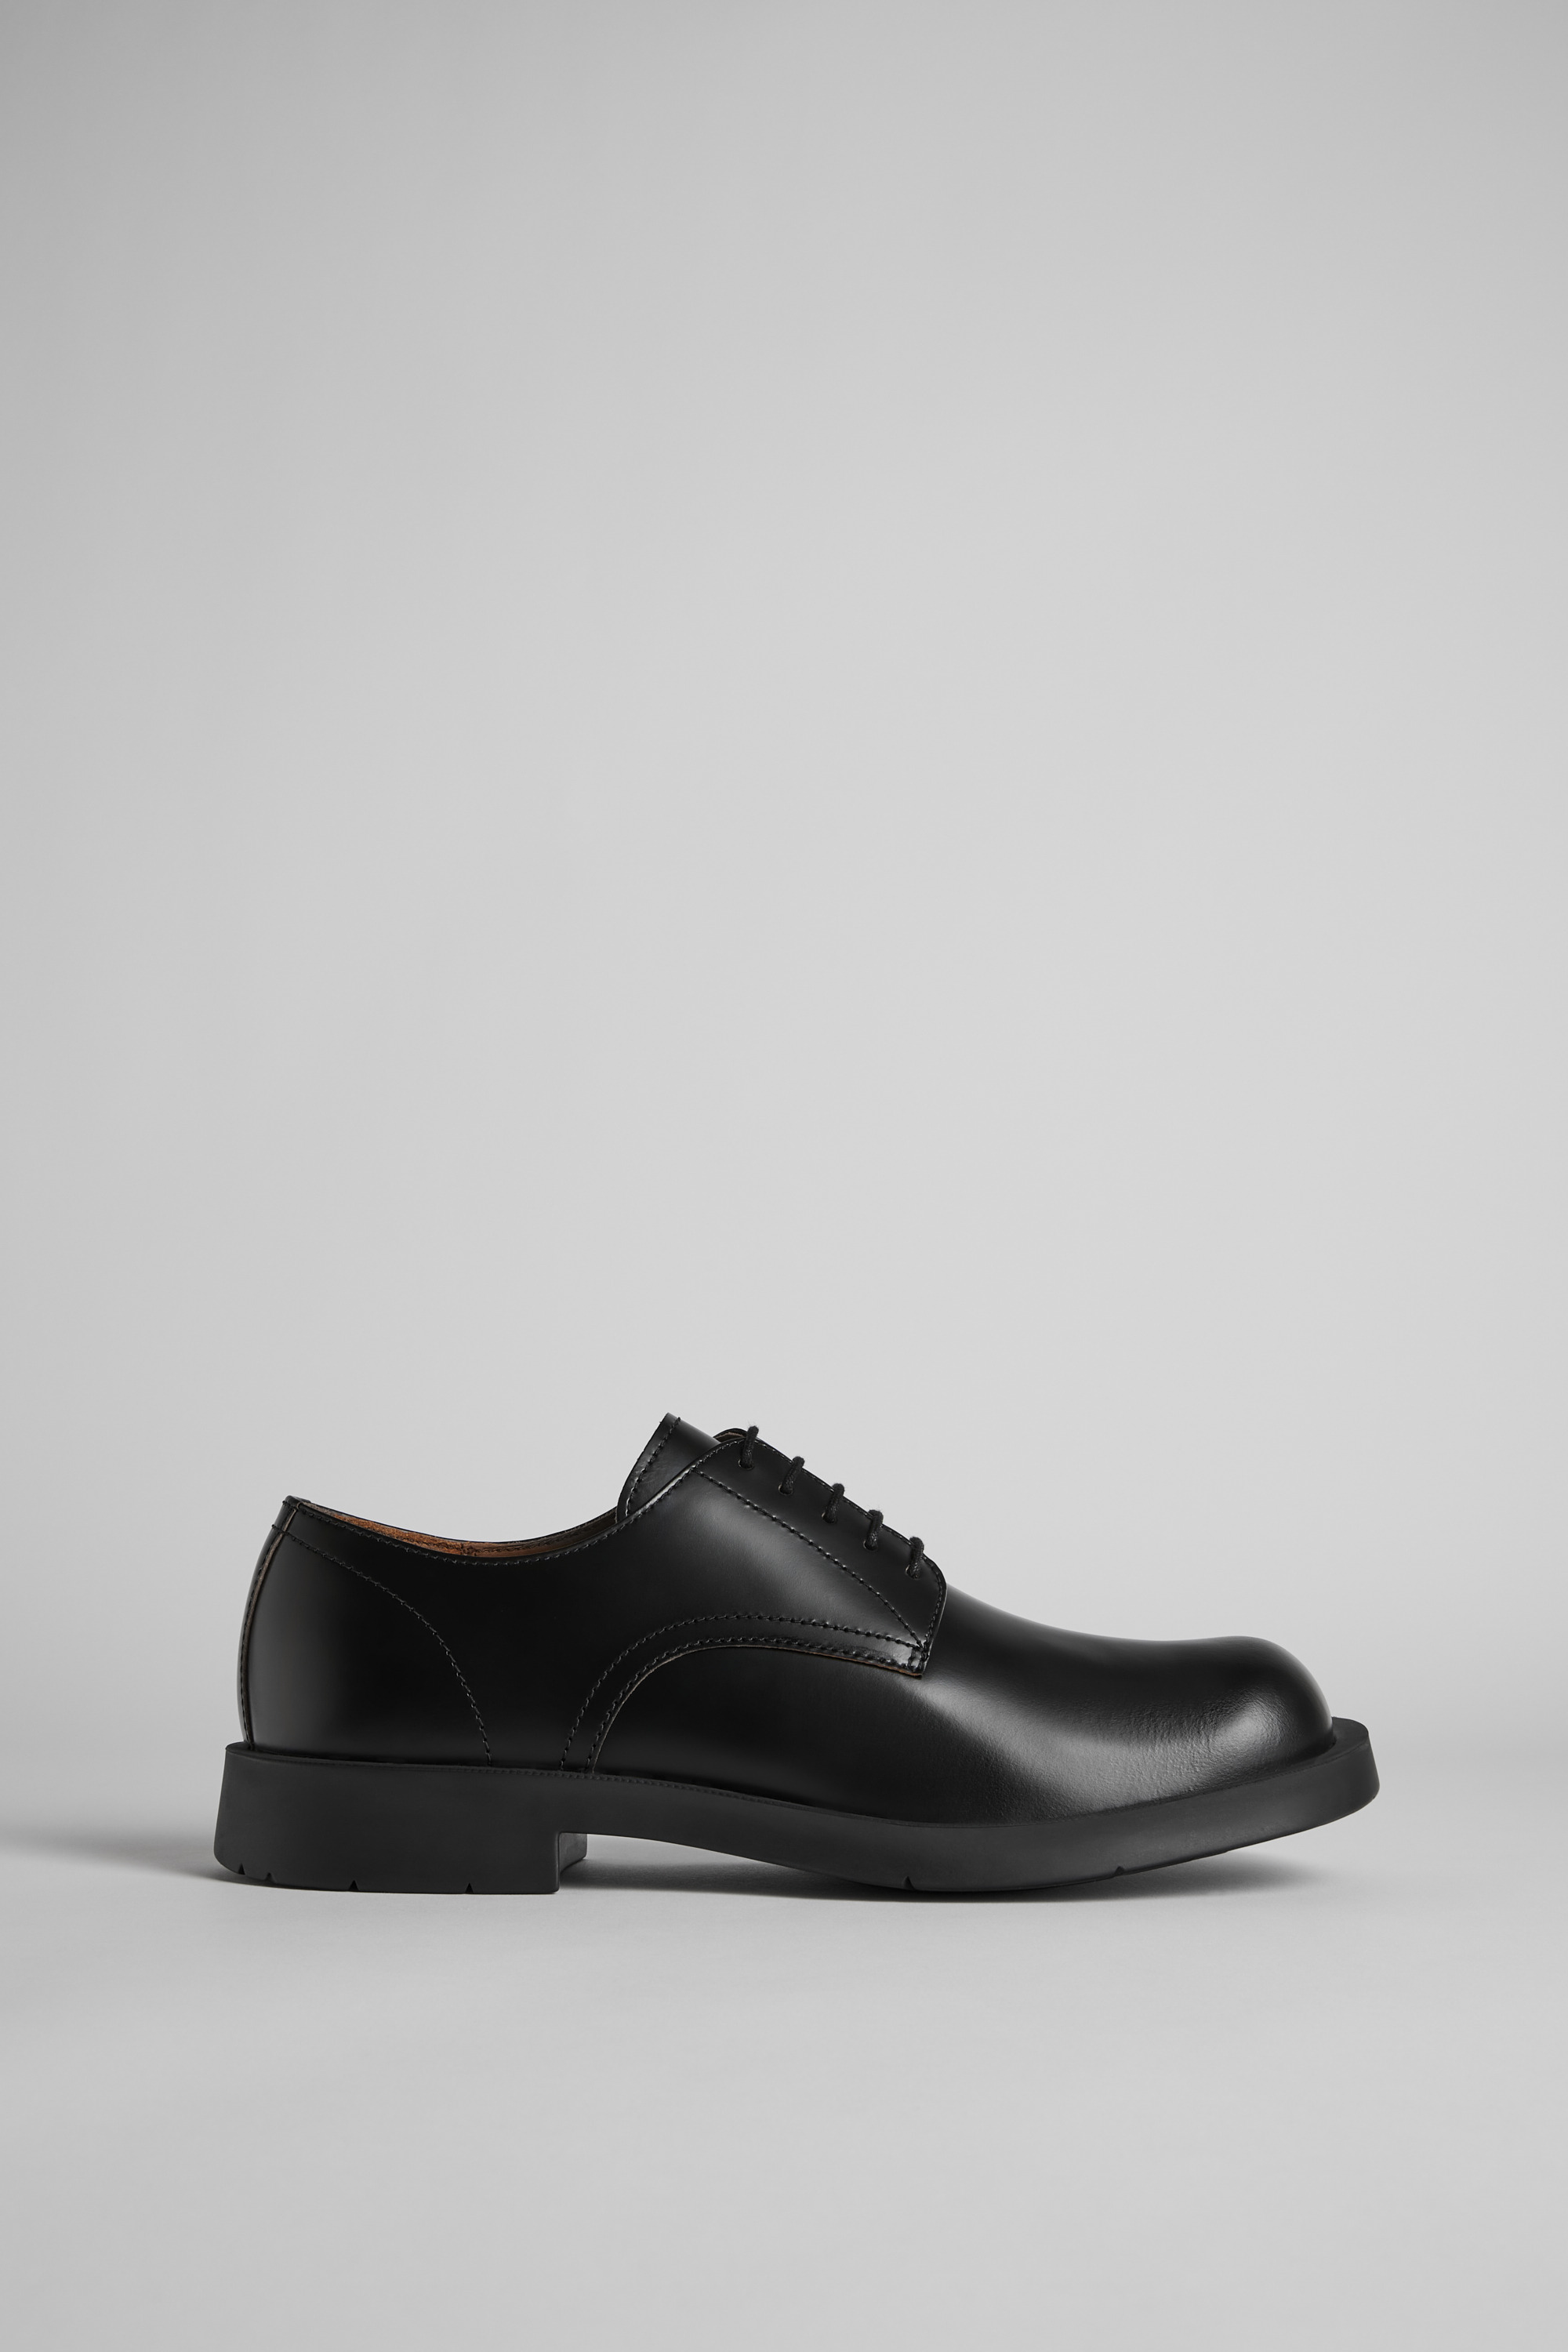 diep Typisch Darmen Neuman Black Formal Shoes for Men - Spring/Summer collection - Camper France